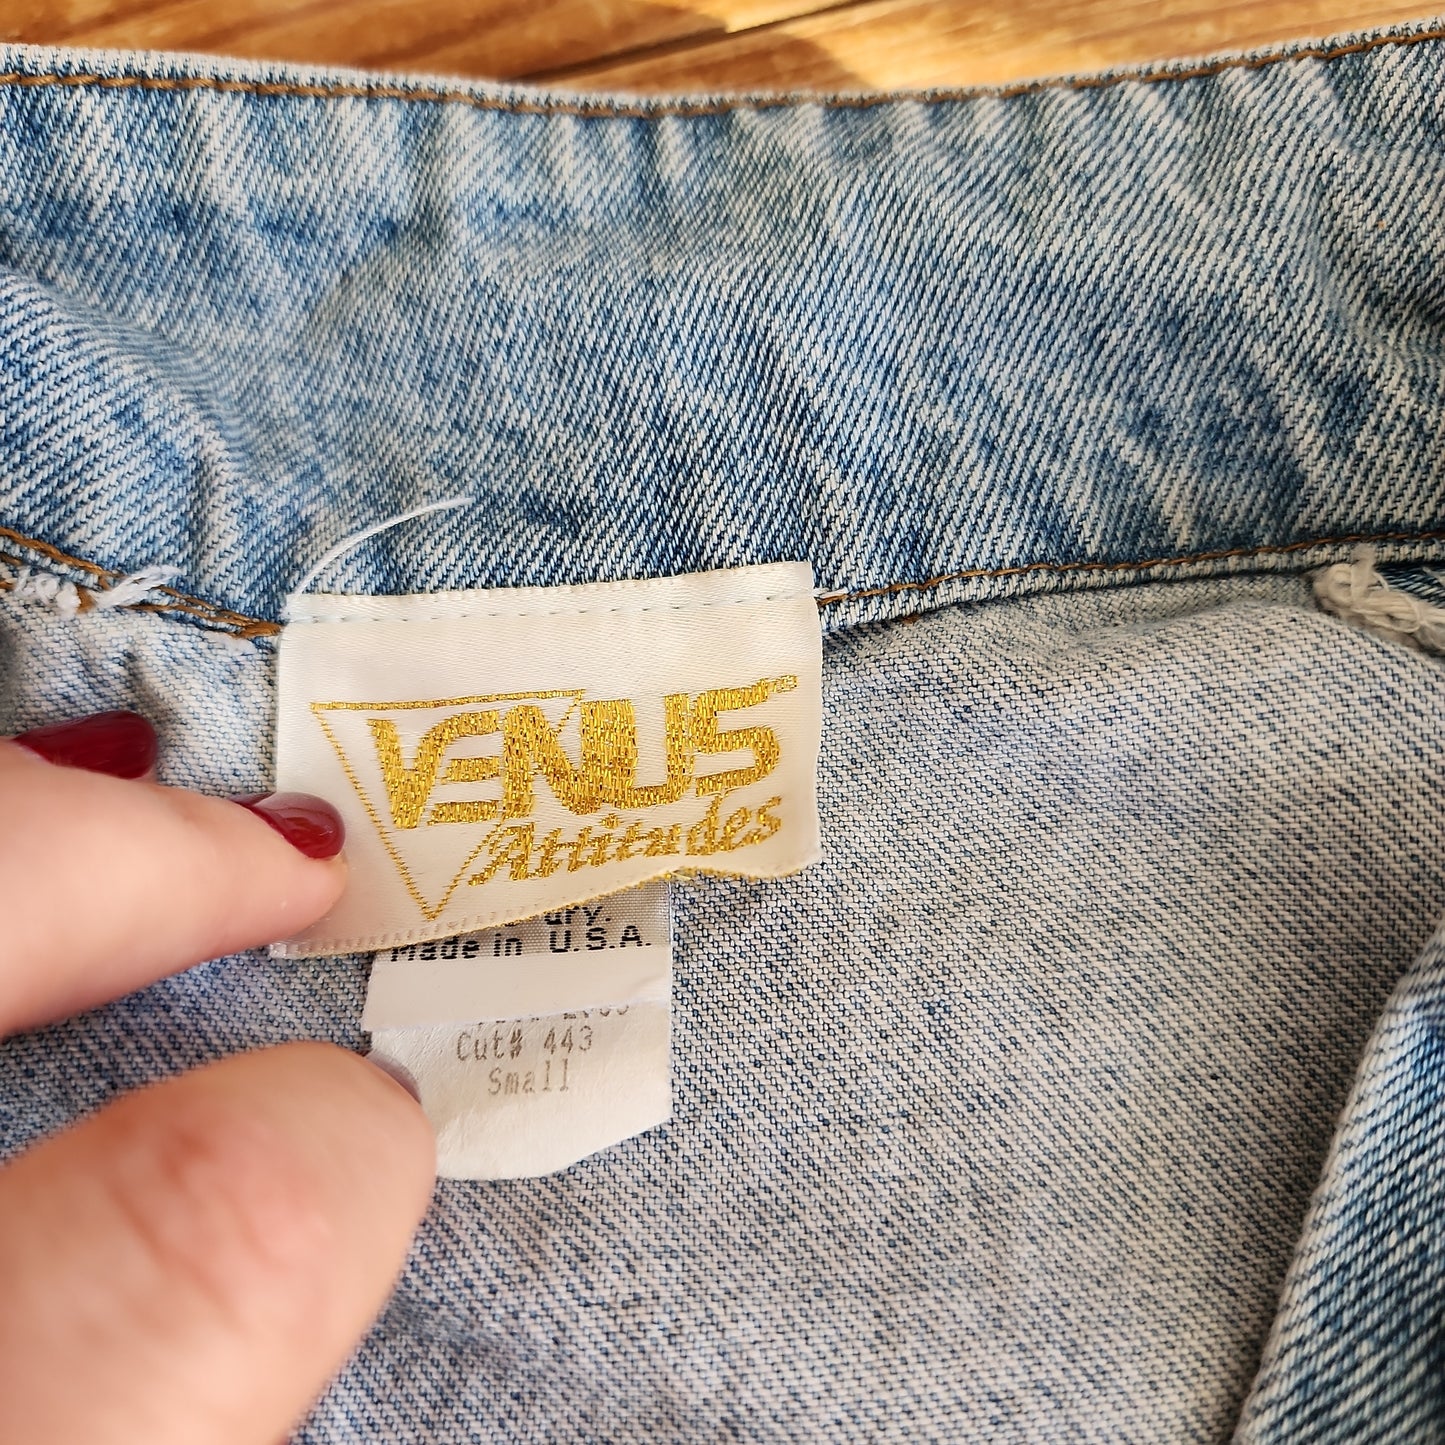 80s Denim Crop Top Vest in Distressed Blue Jean Cotton by Venus Attitudes / S